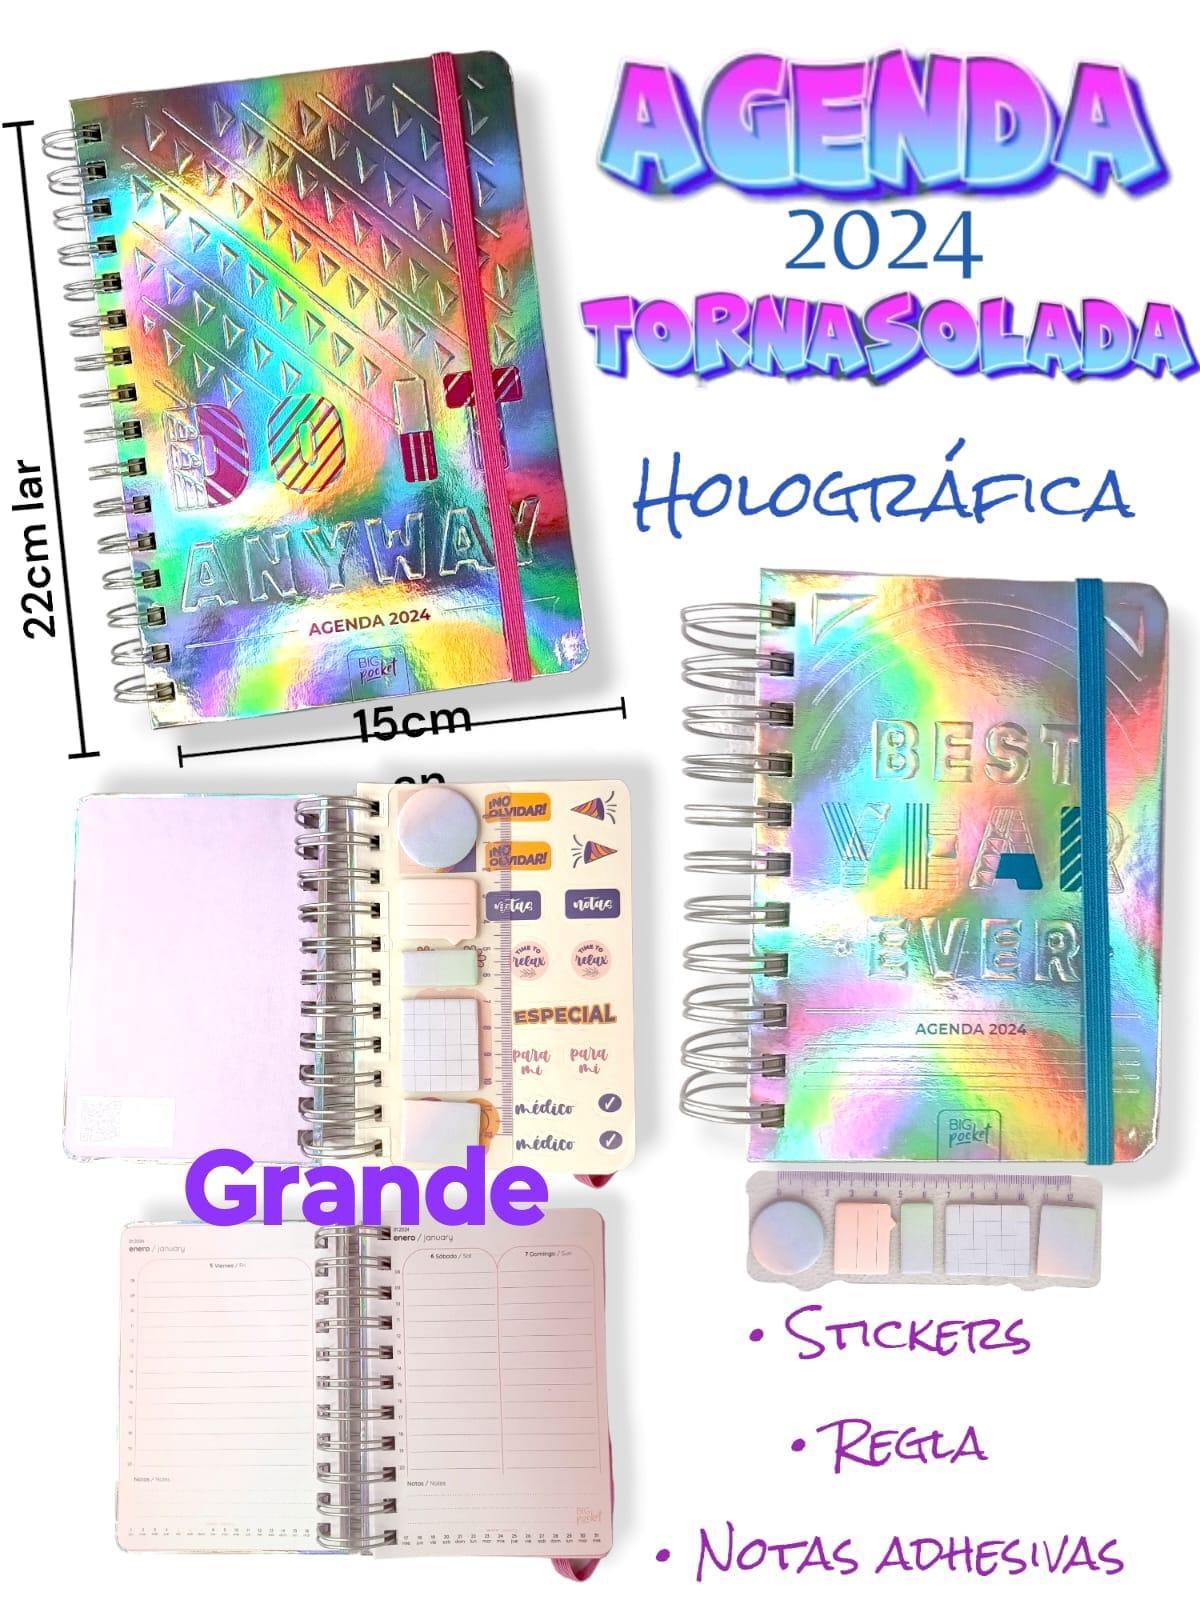 AGENDA 2024 TORNASOLADA HOLOGRAFICA GRANDE